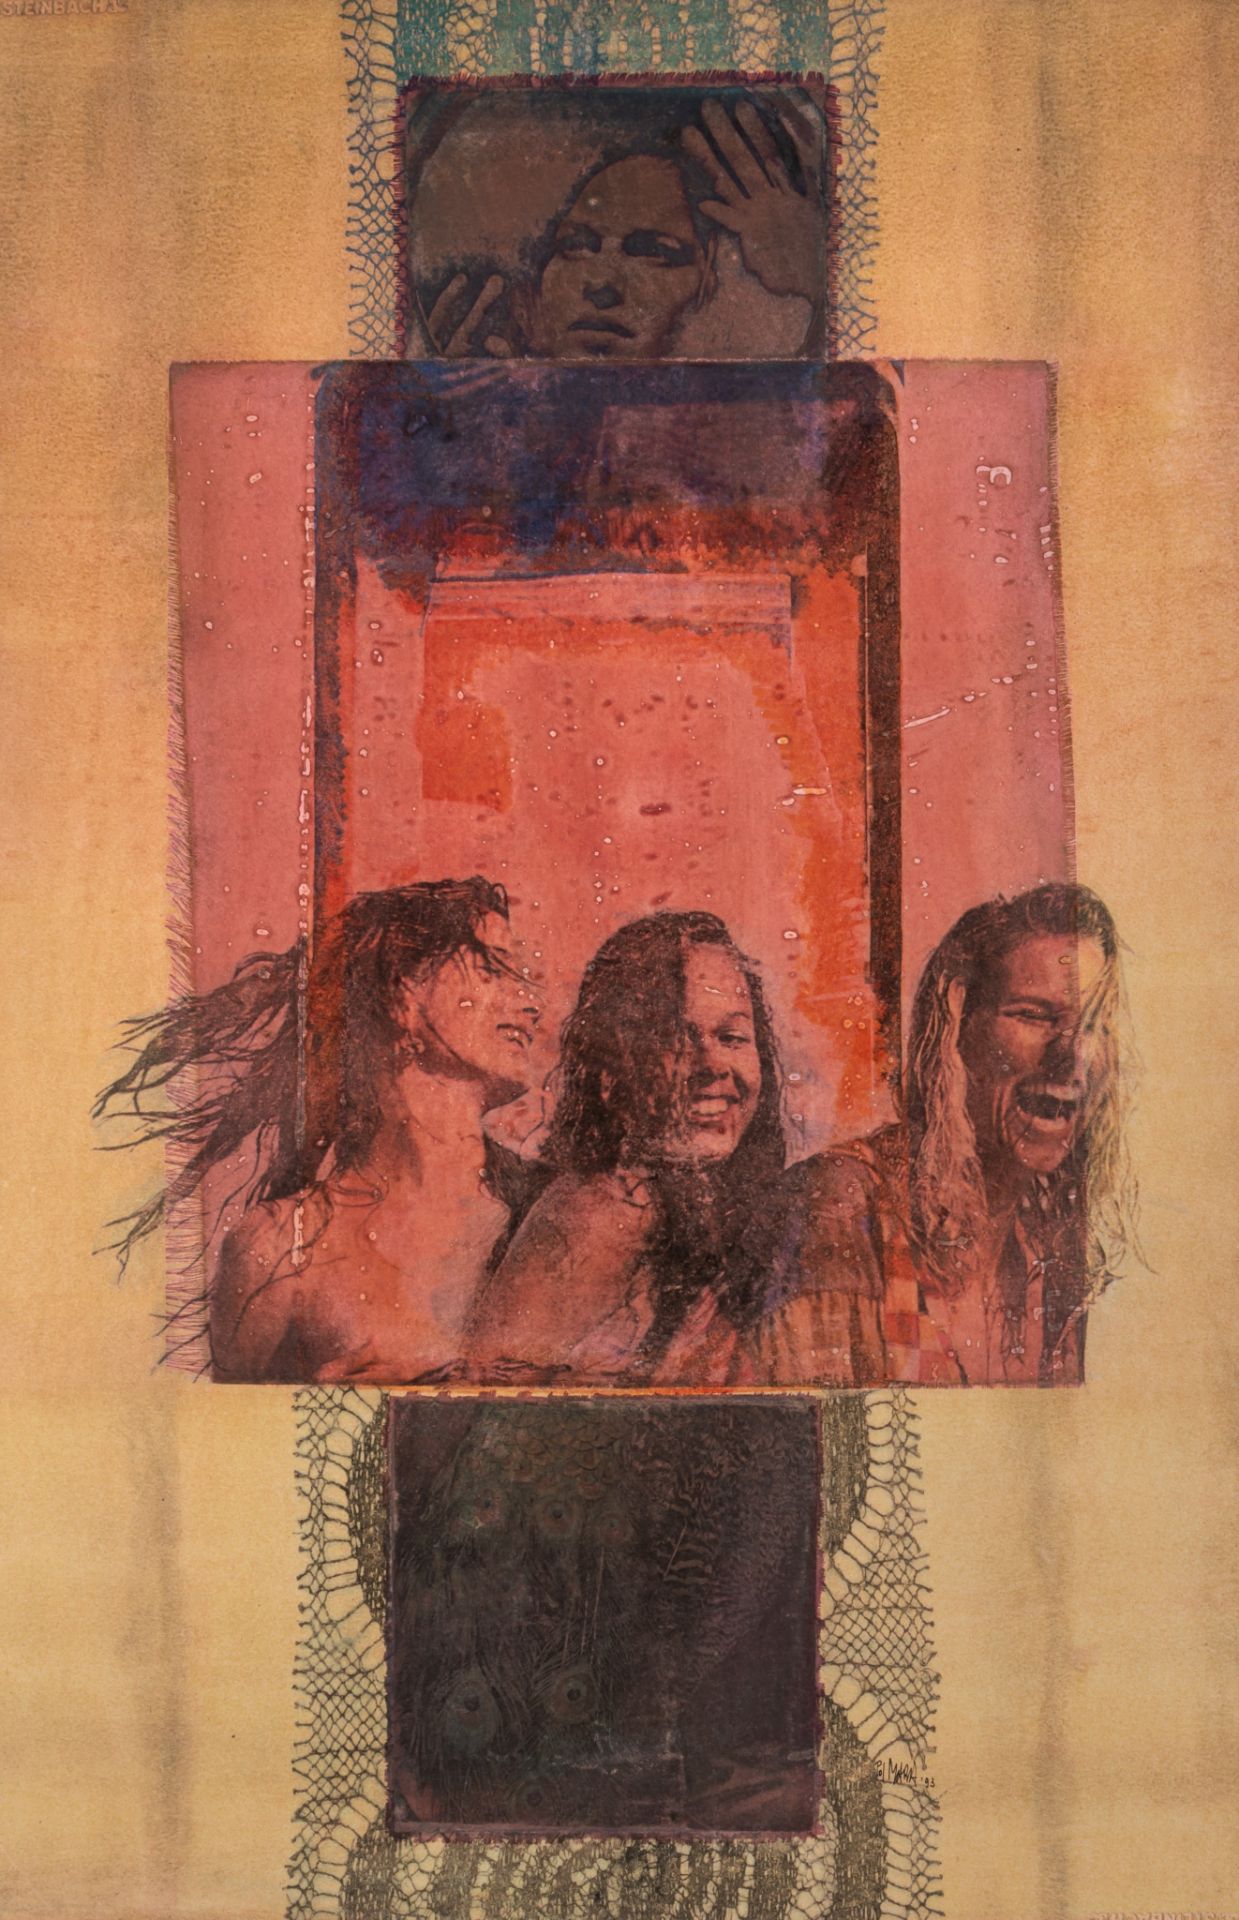 Pol Mara (1920-1998), 'To Ravel out.../ Effilochage', watercolour on paper, 1996, 88 x 125 cm